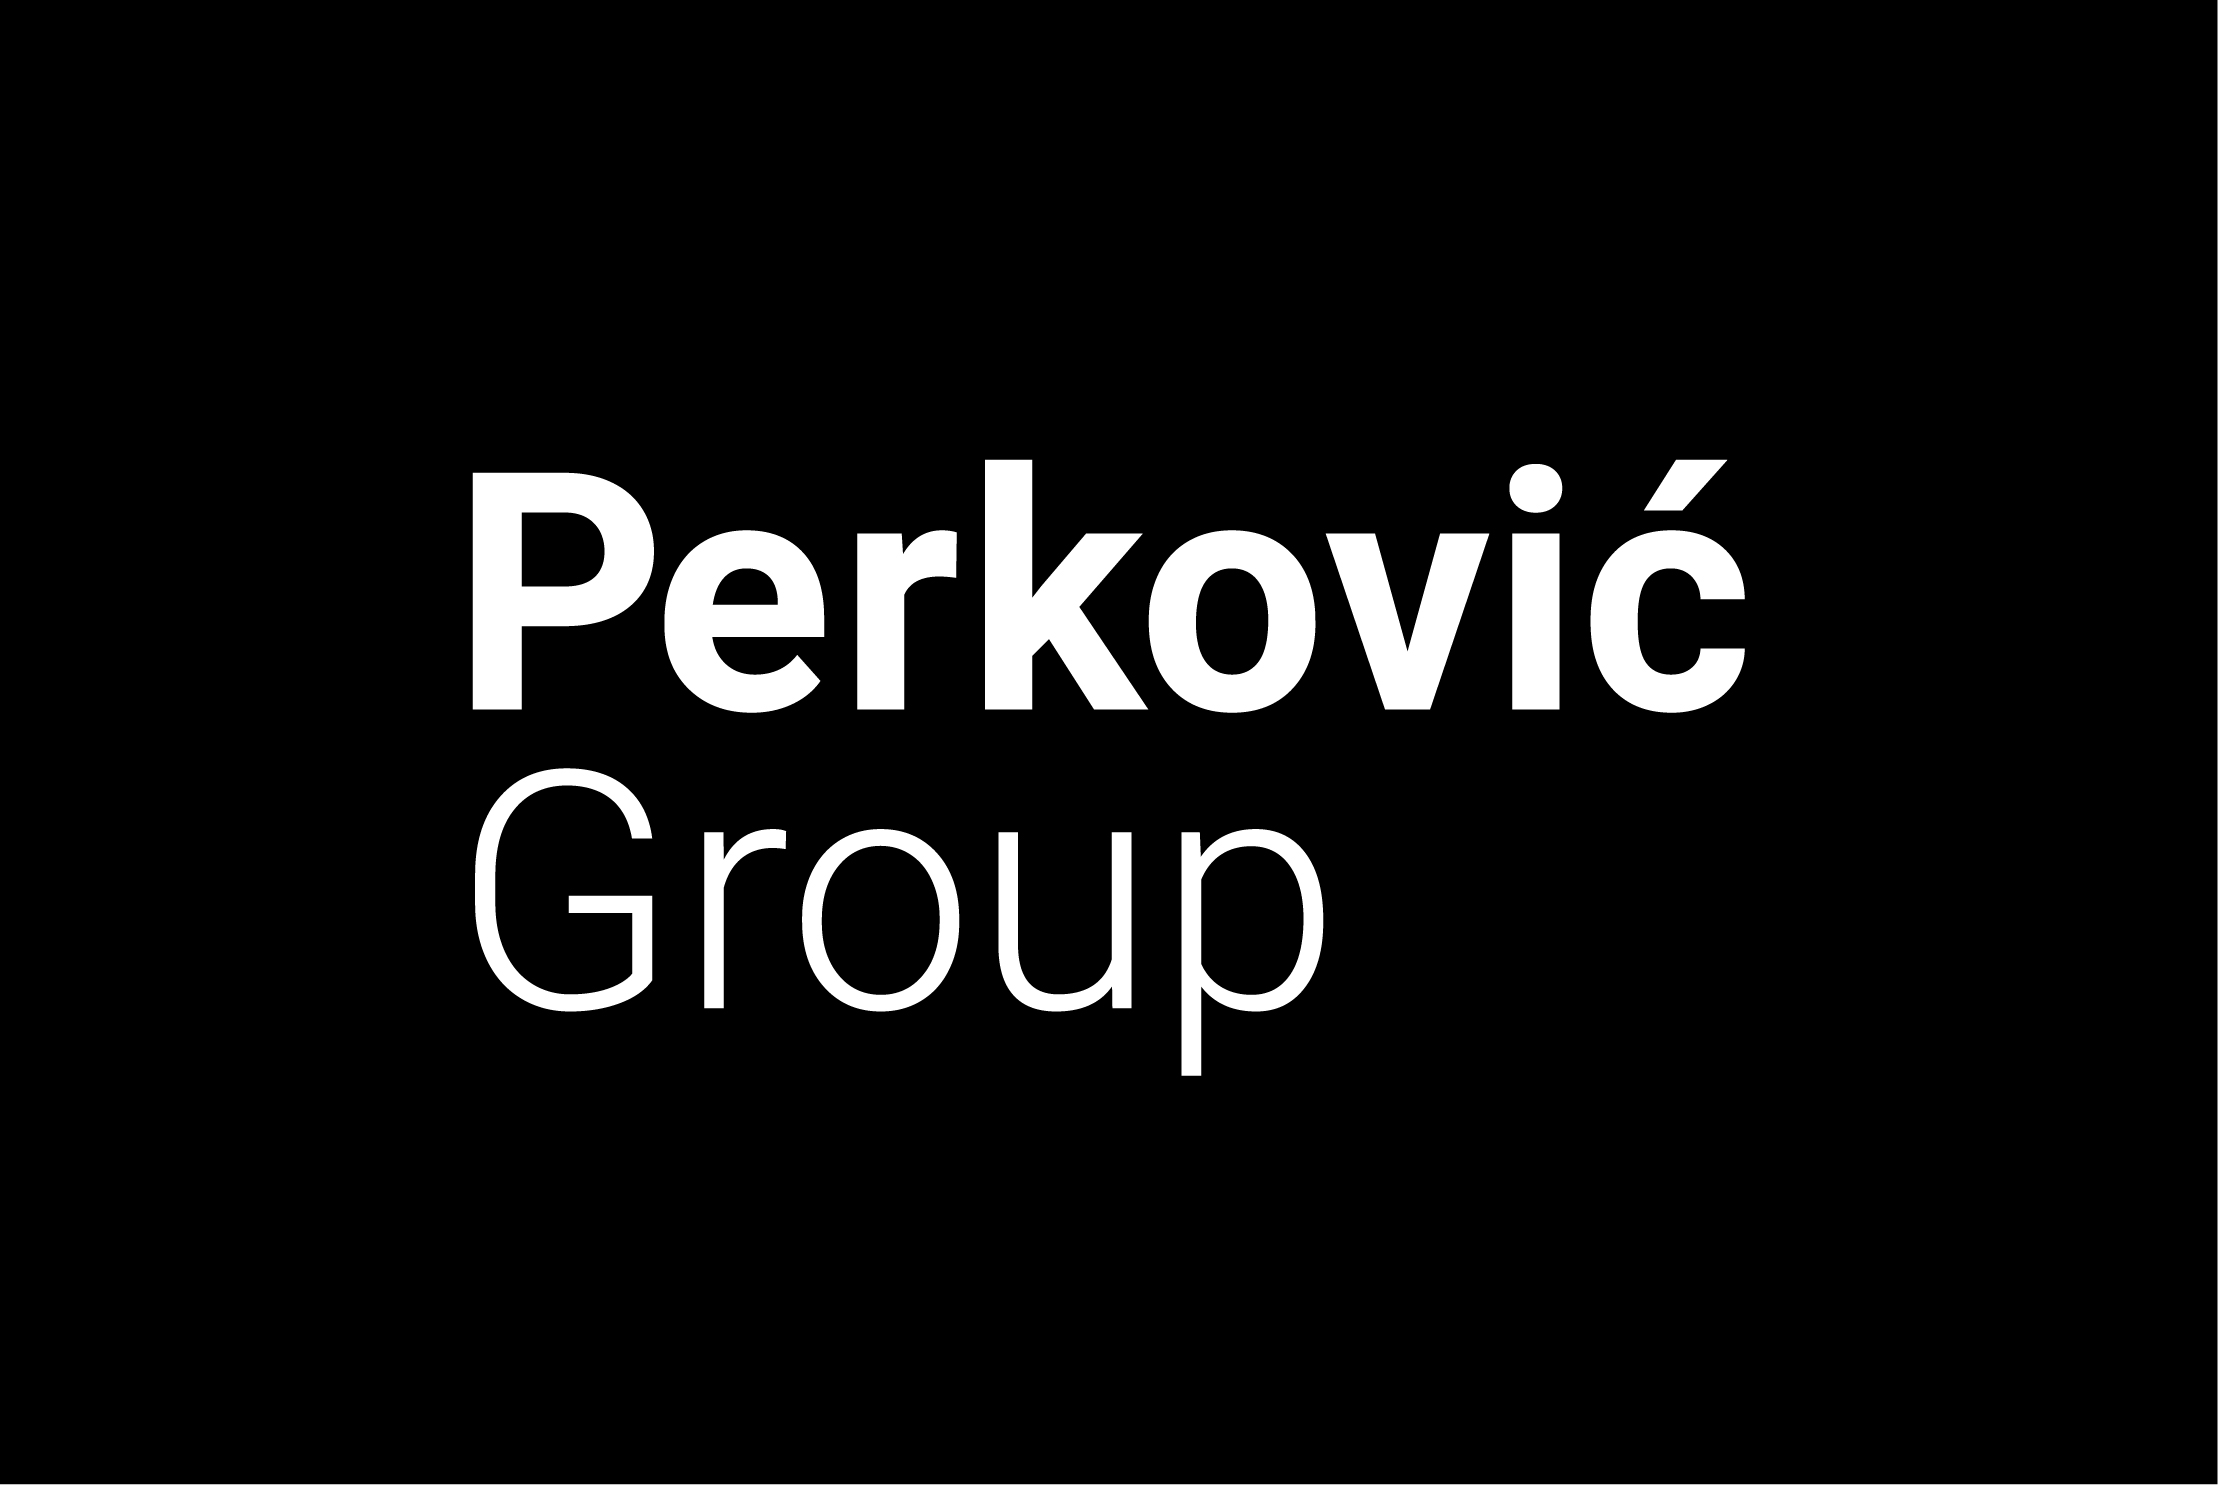 Perkovic Group